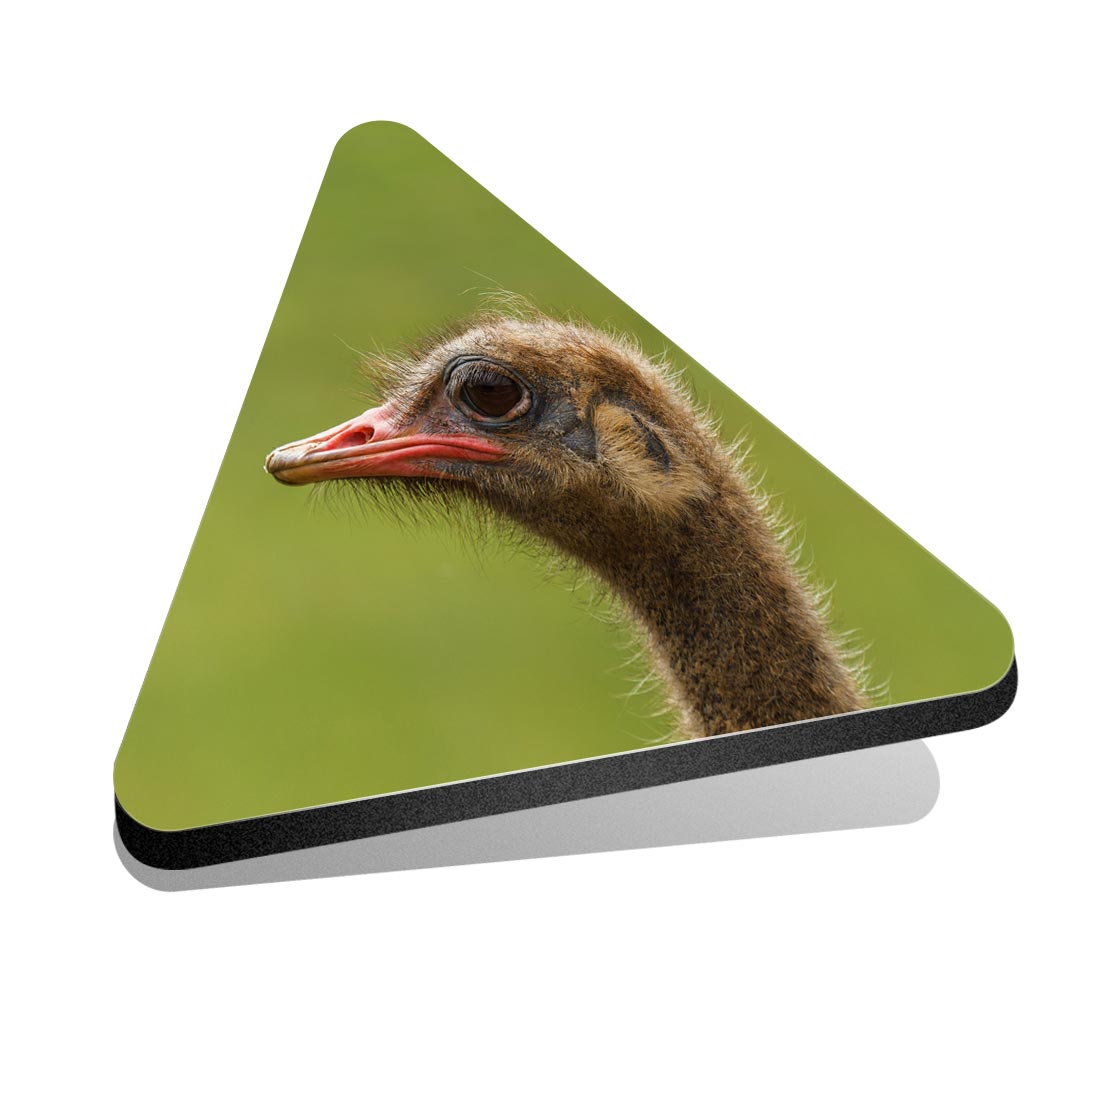 1x Triangle Fridge MDF Magnet Ostrich Head Struthio Camelus Bird #51629 - Picture 1 of 1